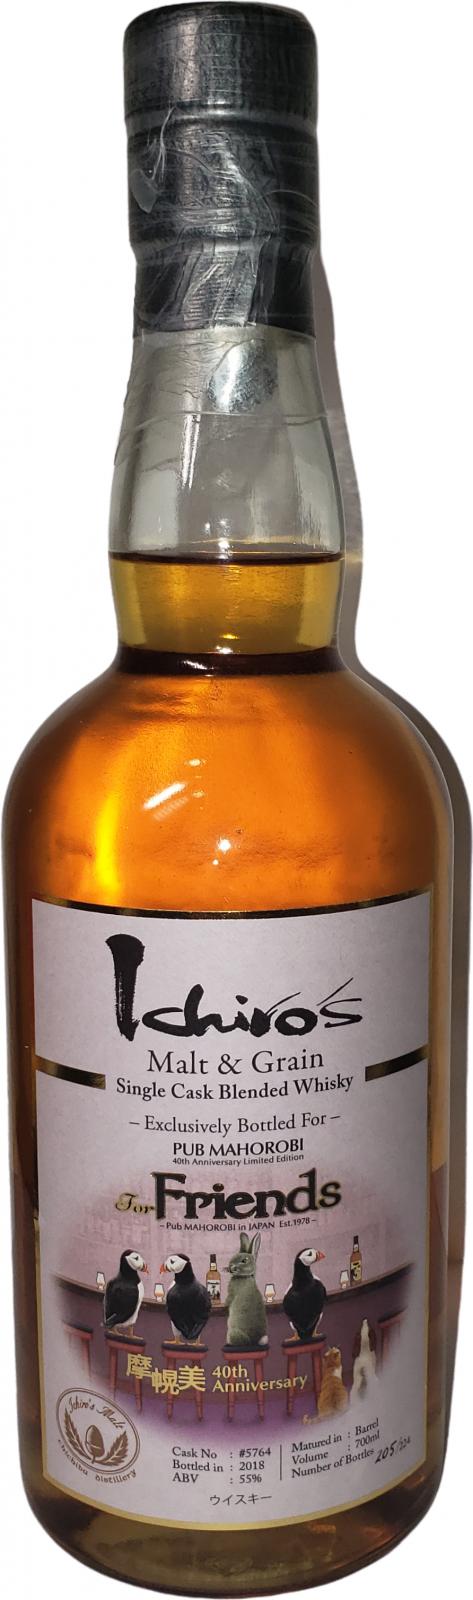 Chichibu Ichiro's Malt & Grain Single Cask Blended Whisky Barrel #5764 PUB Mahorobi 40th Anniversary 55% 700ml